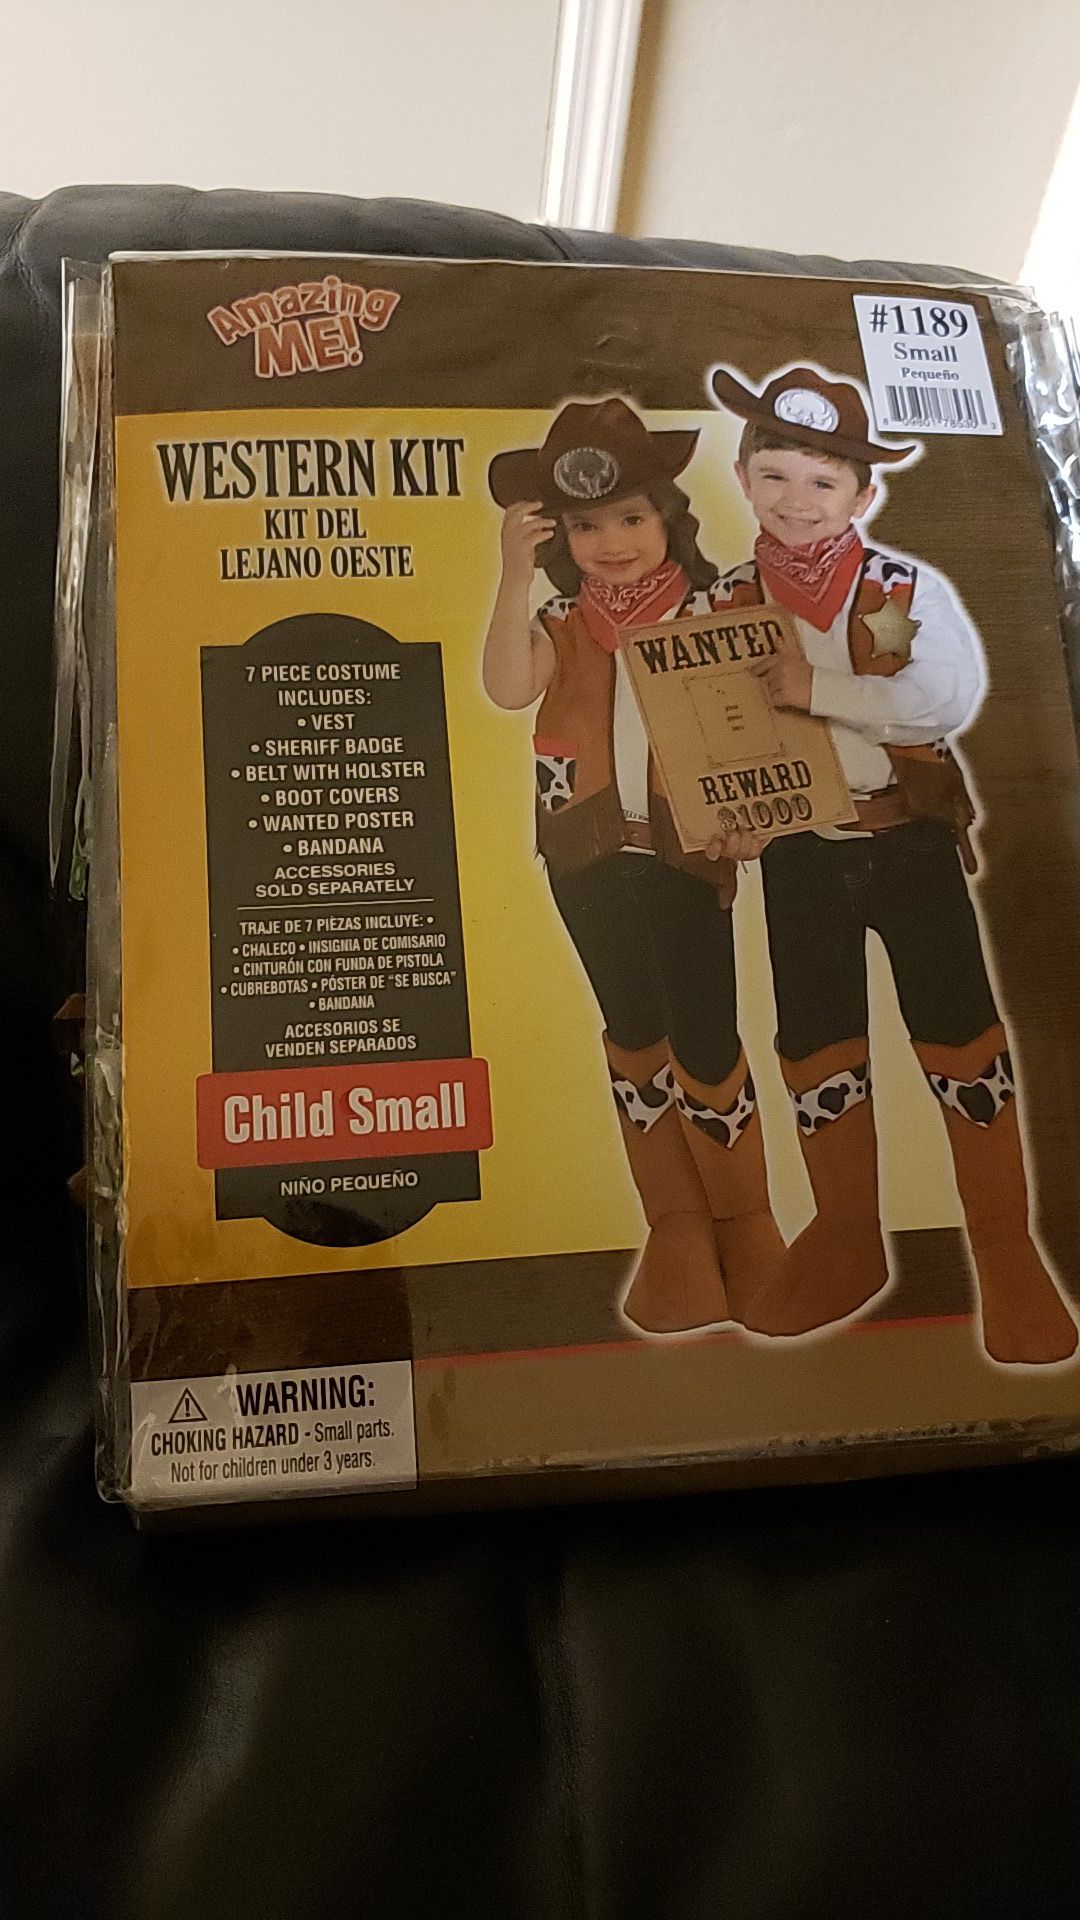 Western kit costume